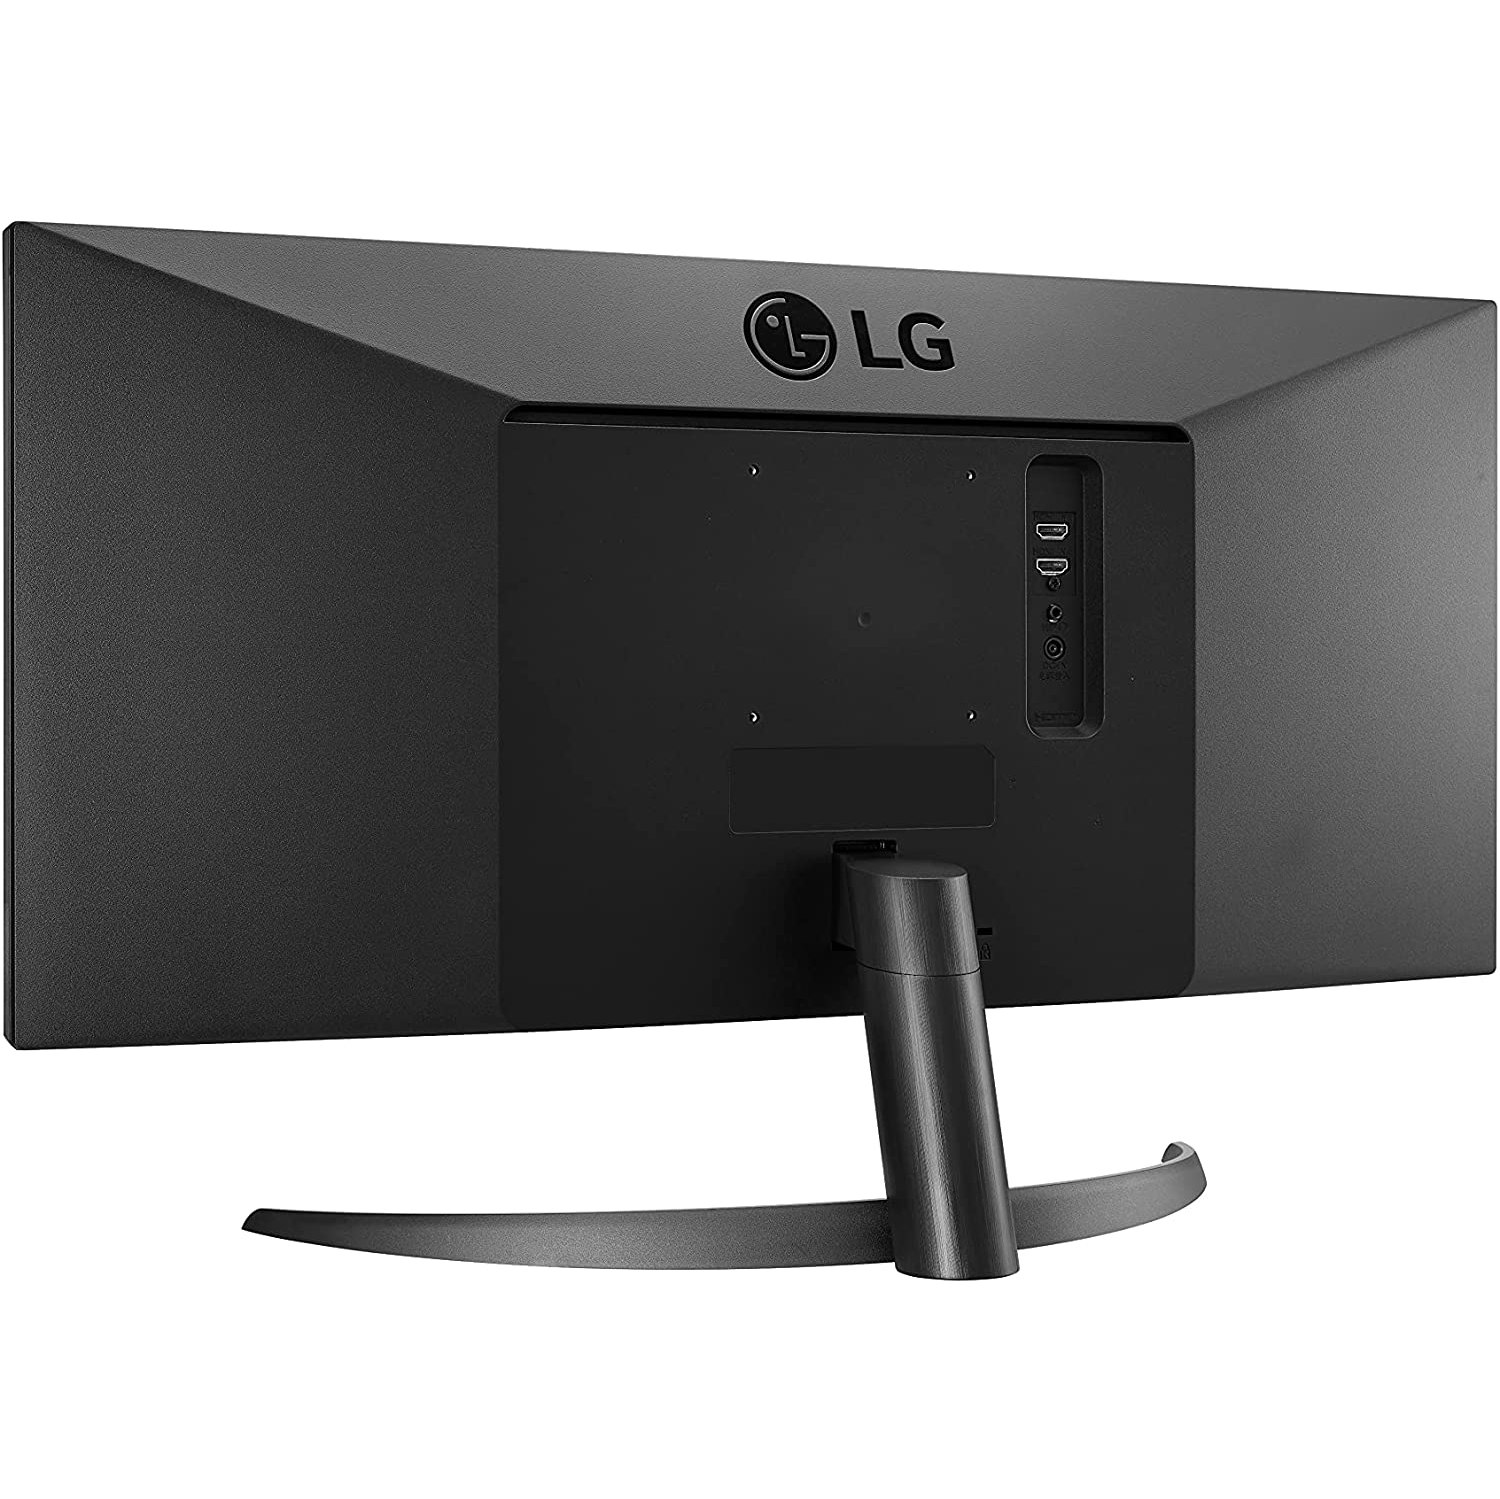 LG 29 IPS LED FHD 21:9 UltraWide FreeSync Monitor 29UM60-P - Best Buy